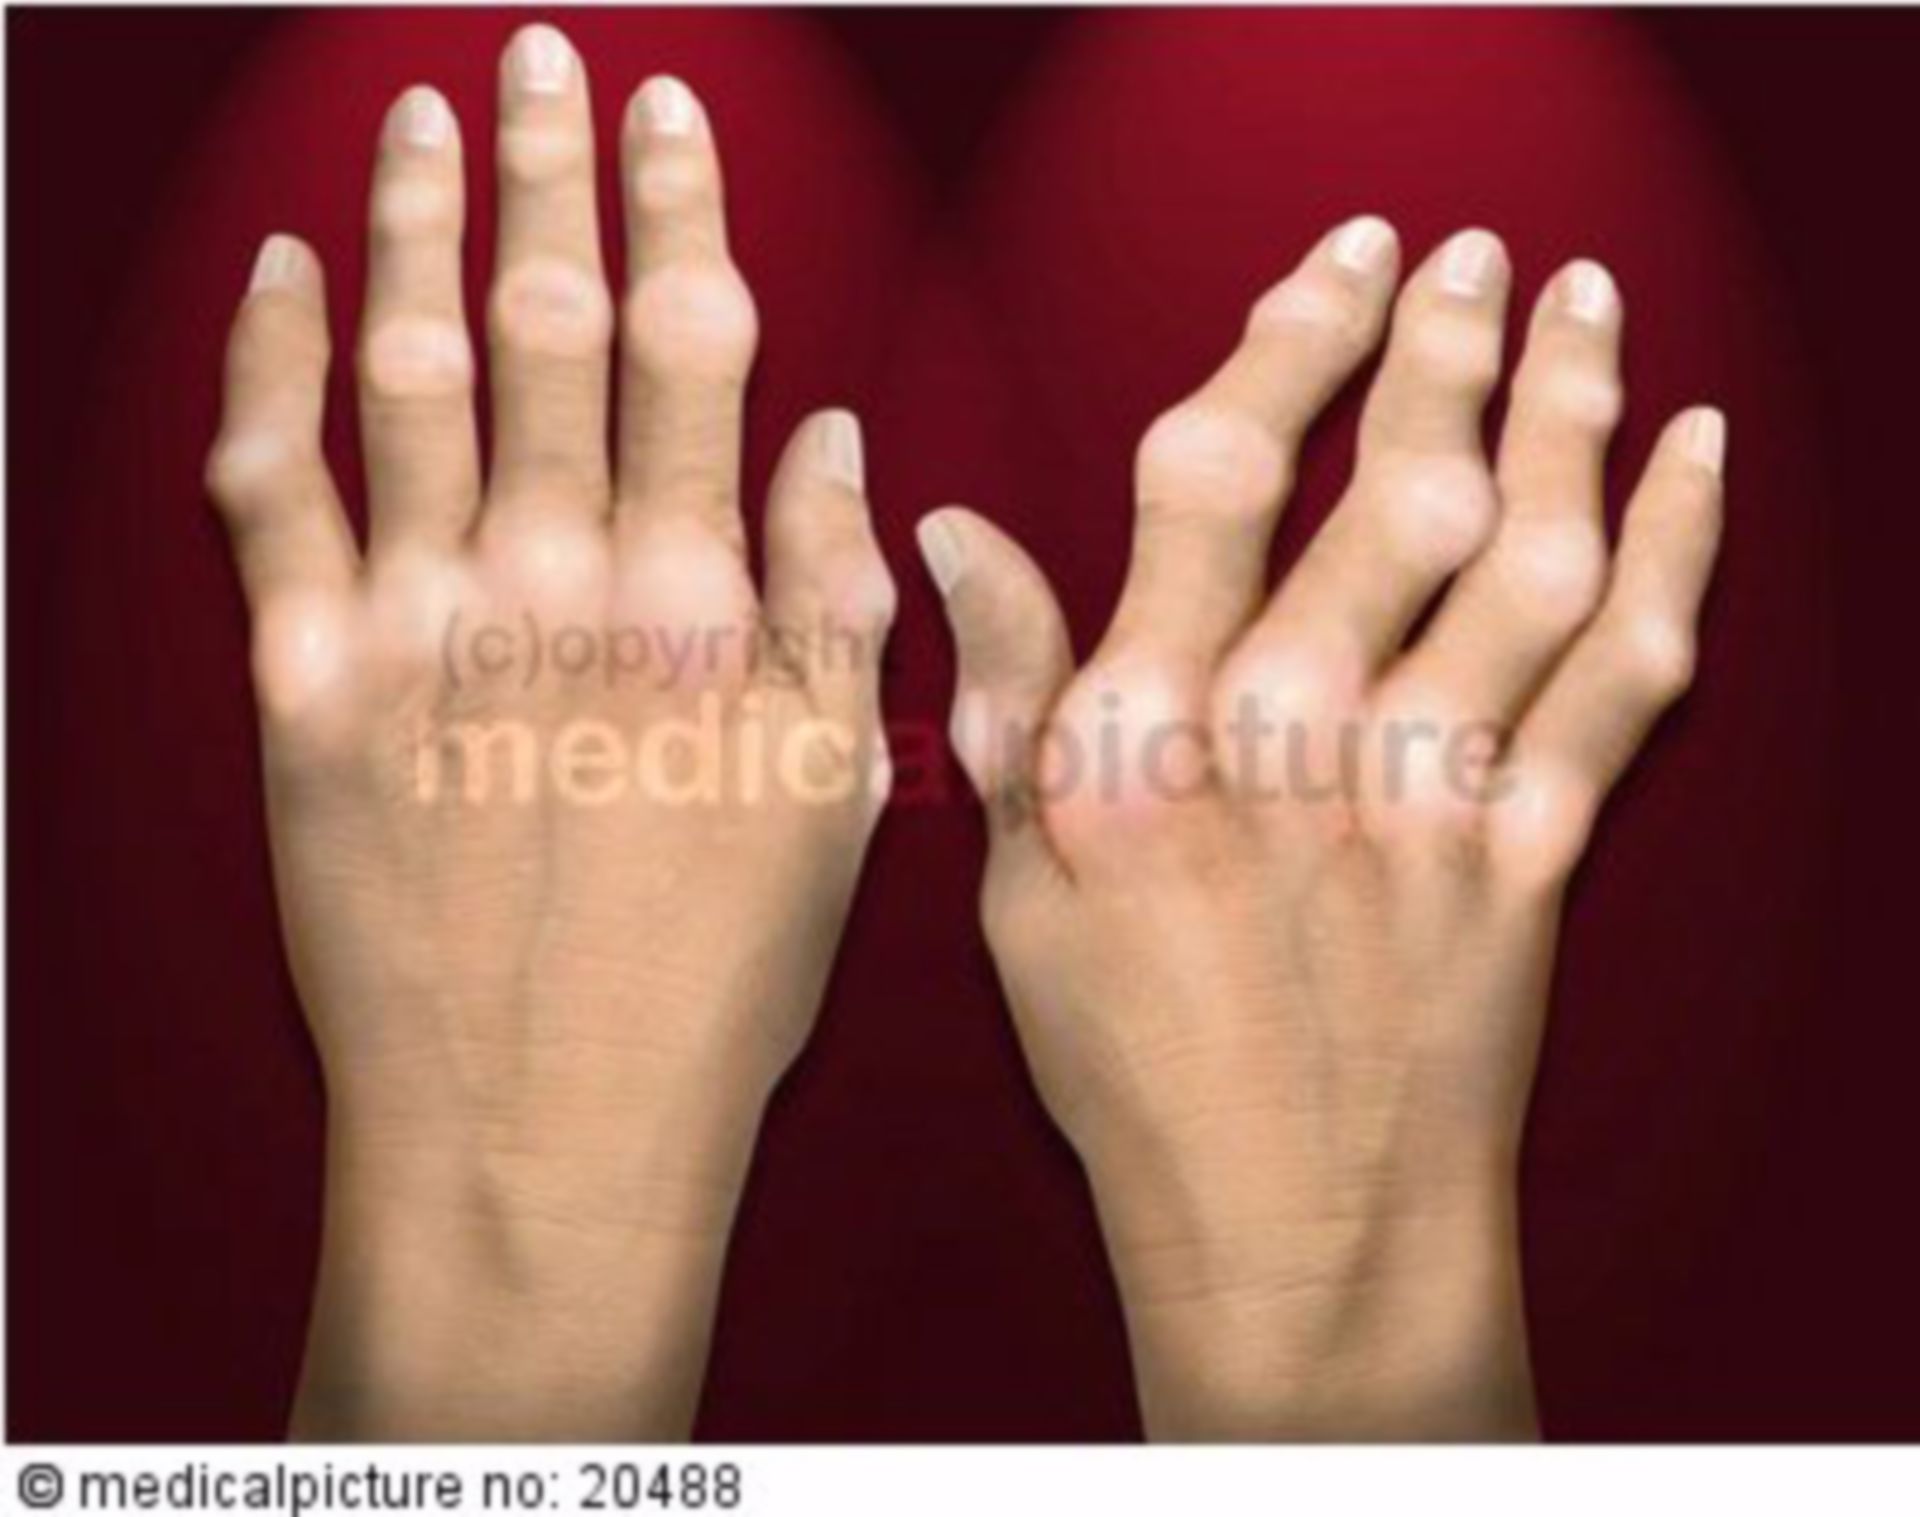 Deformed Hands due to Rheumatoid Arthritis